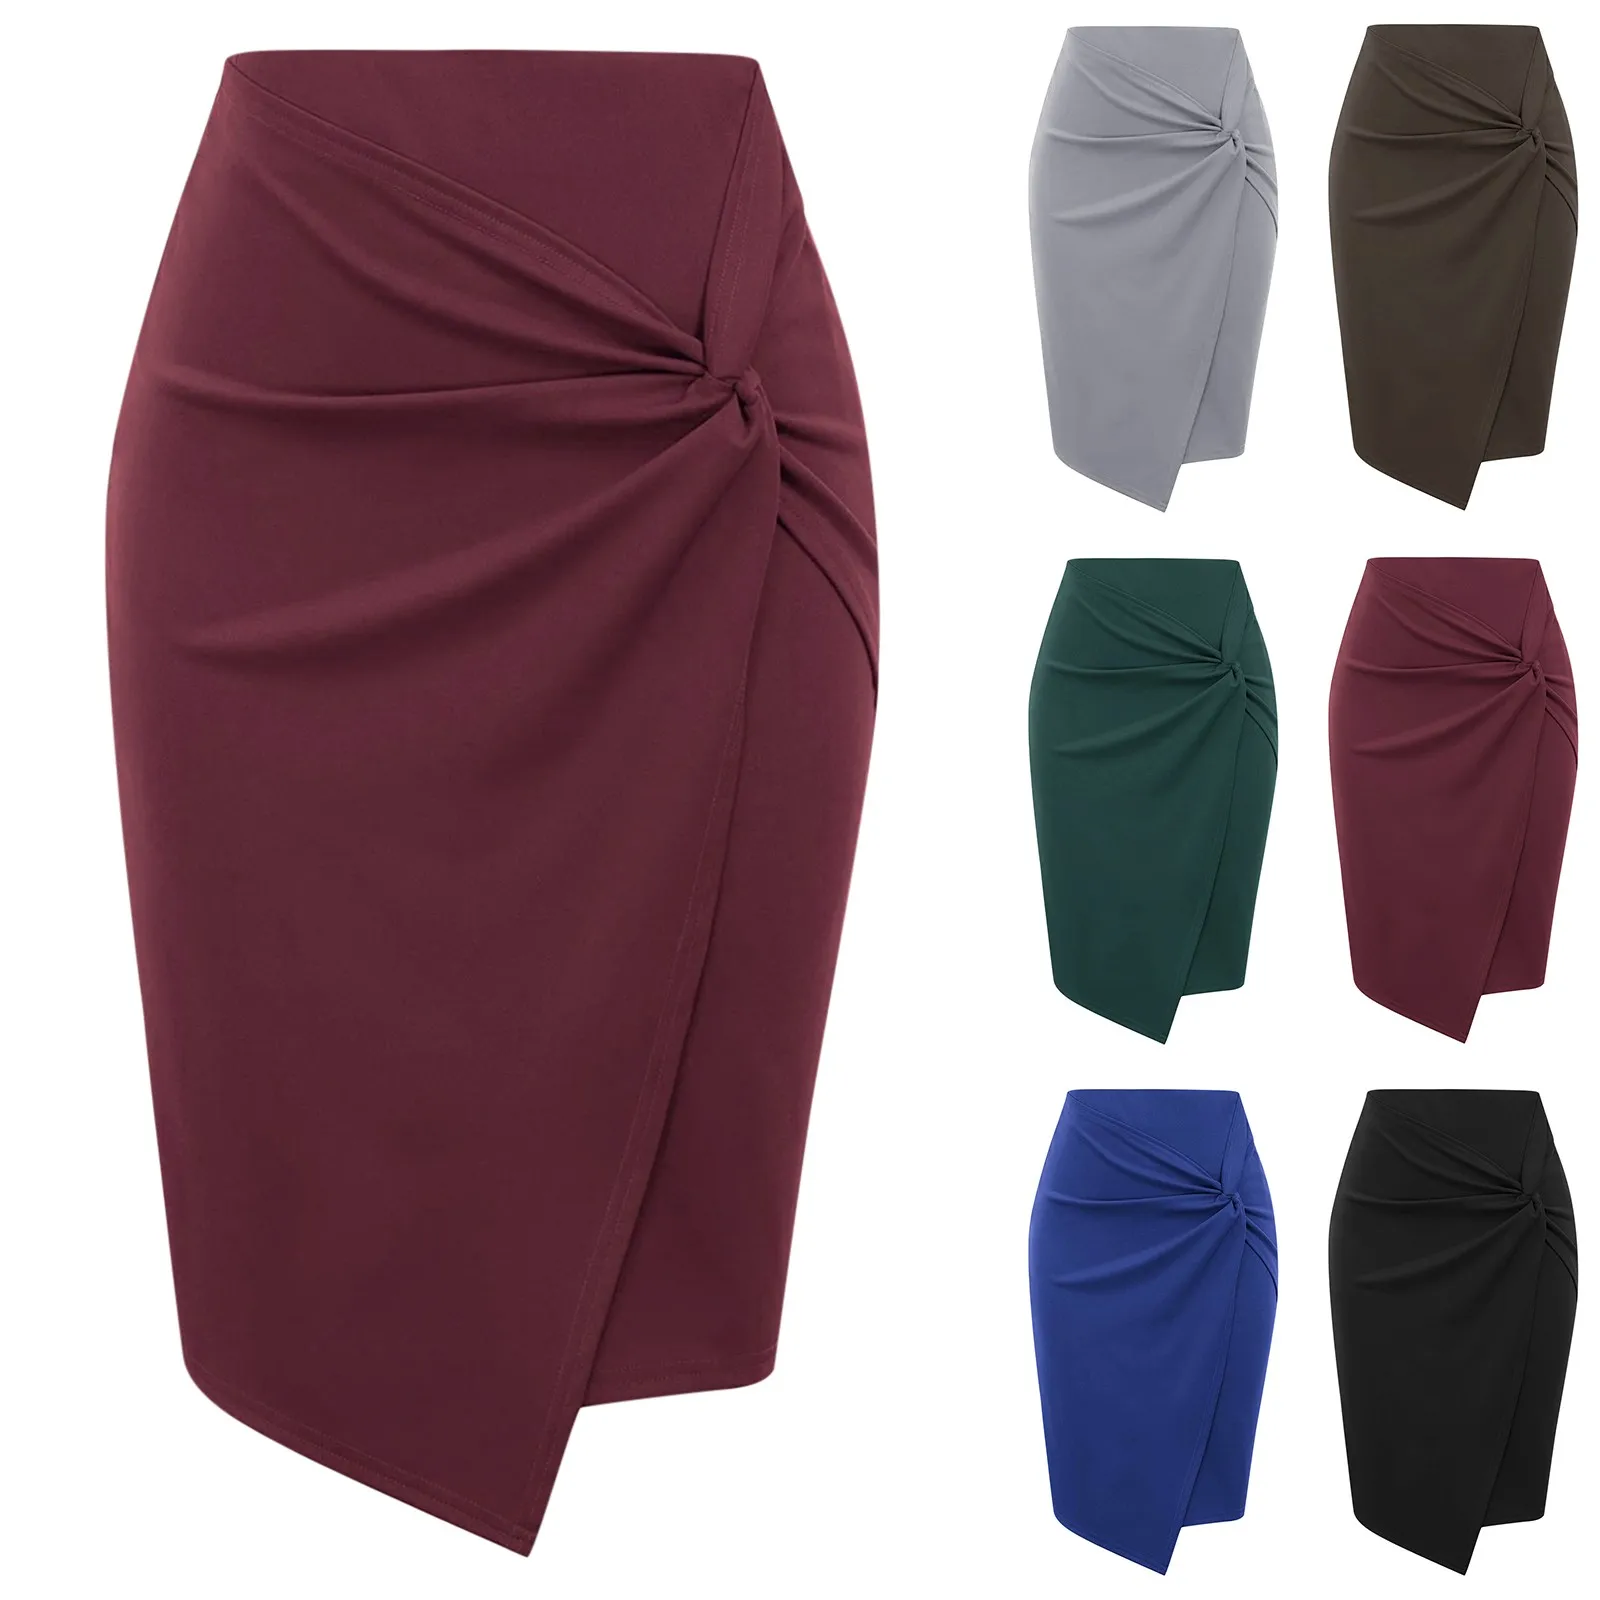 New in  Skirts Sexy Women Solid  High Waist Female Fashion Bodycon Irregular Office Lady Party Clubwear   Мини Юбки